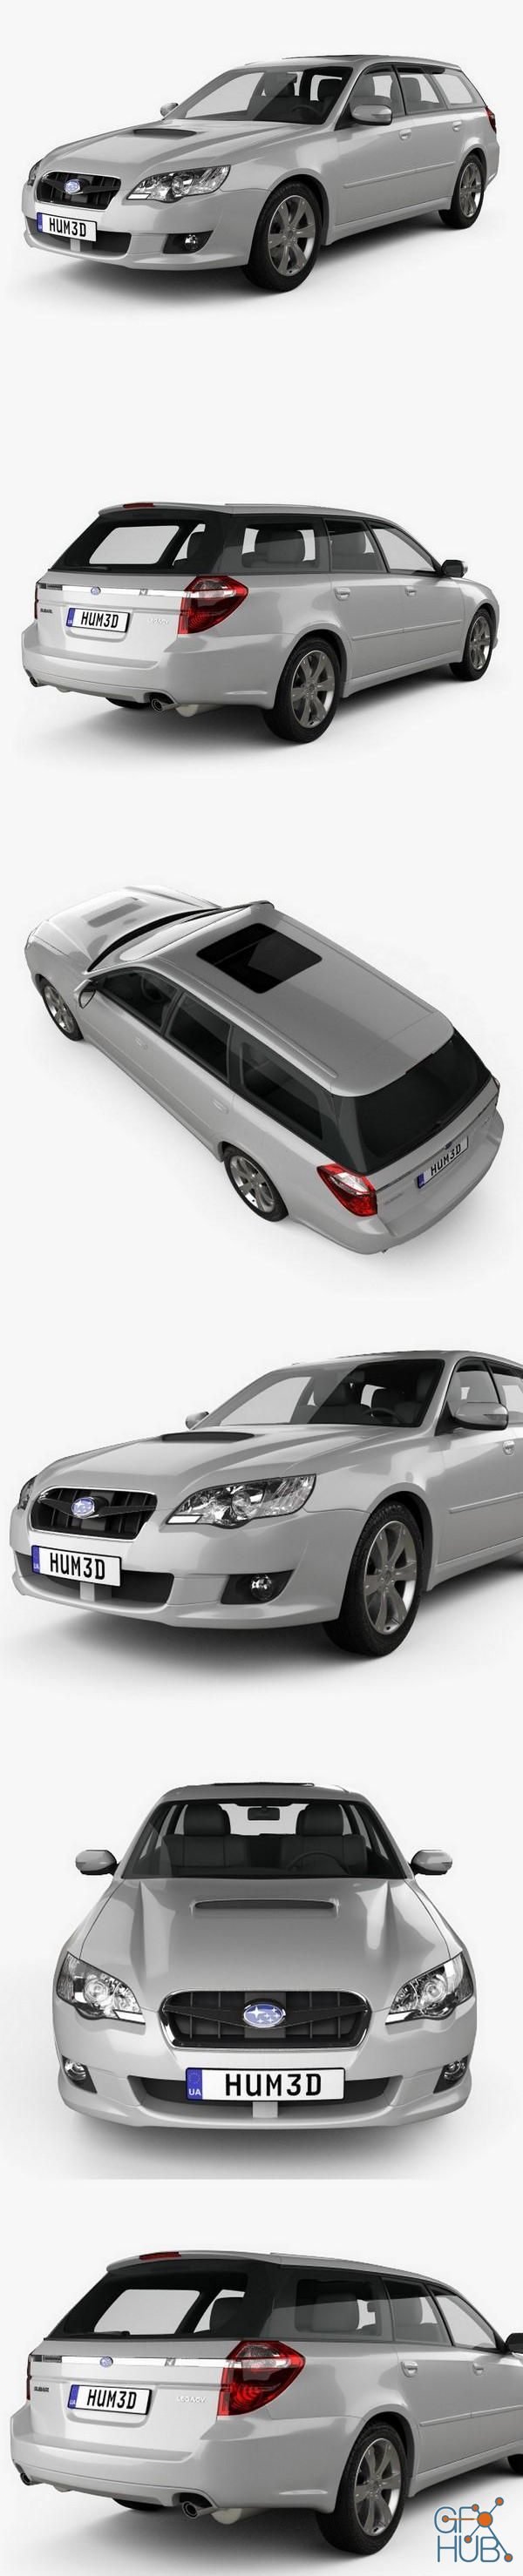 Hum 3D Subaru Legacy station wagon 2008